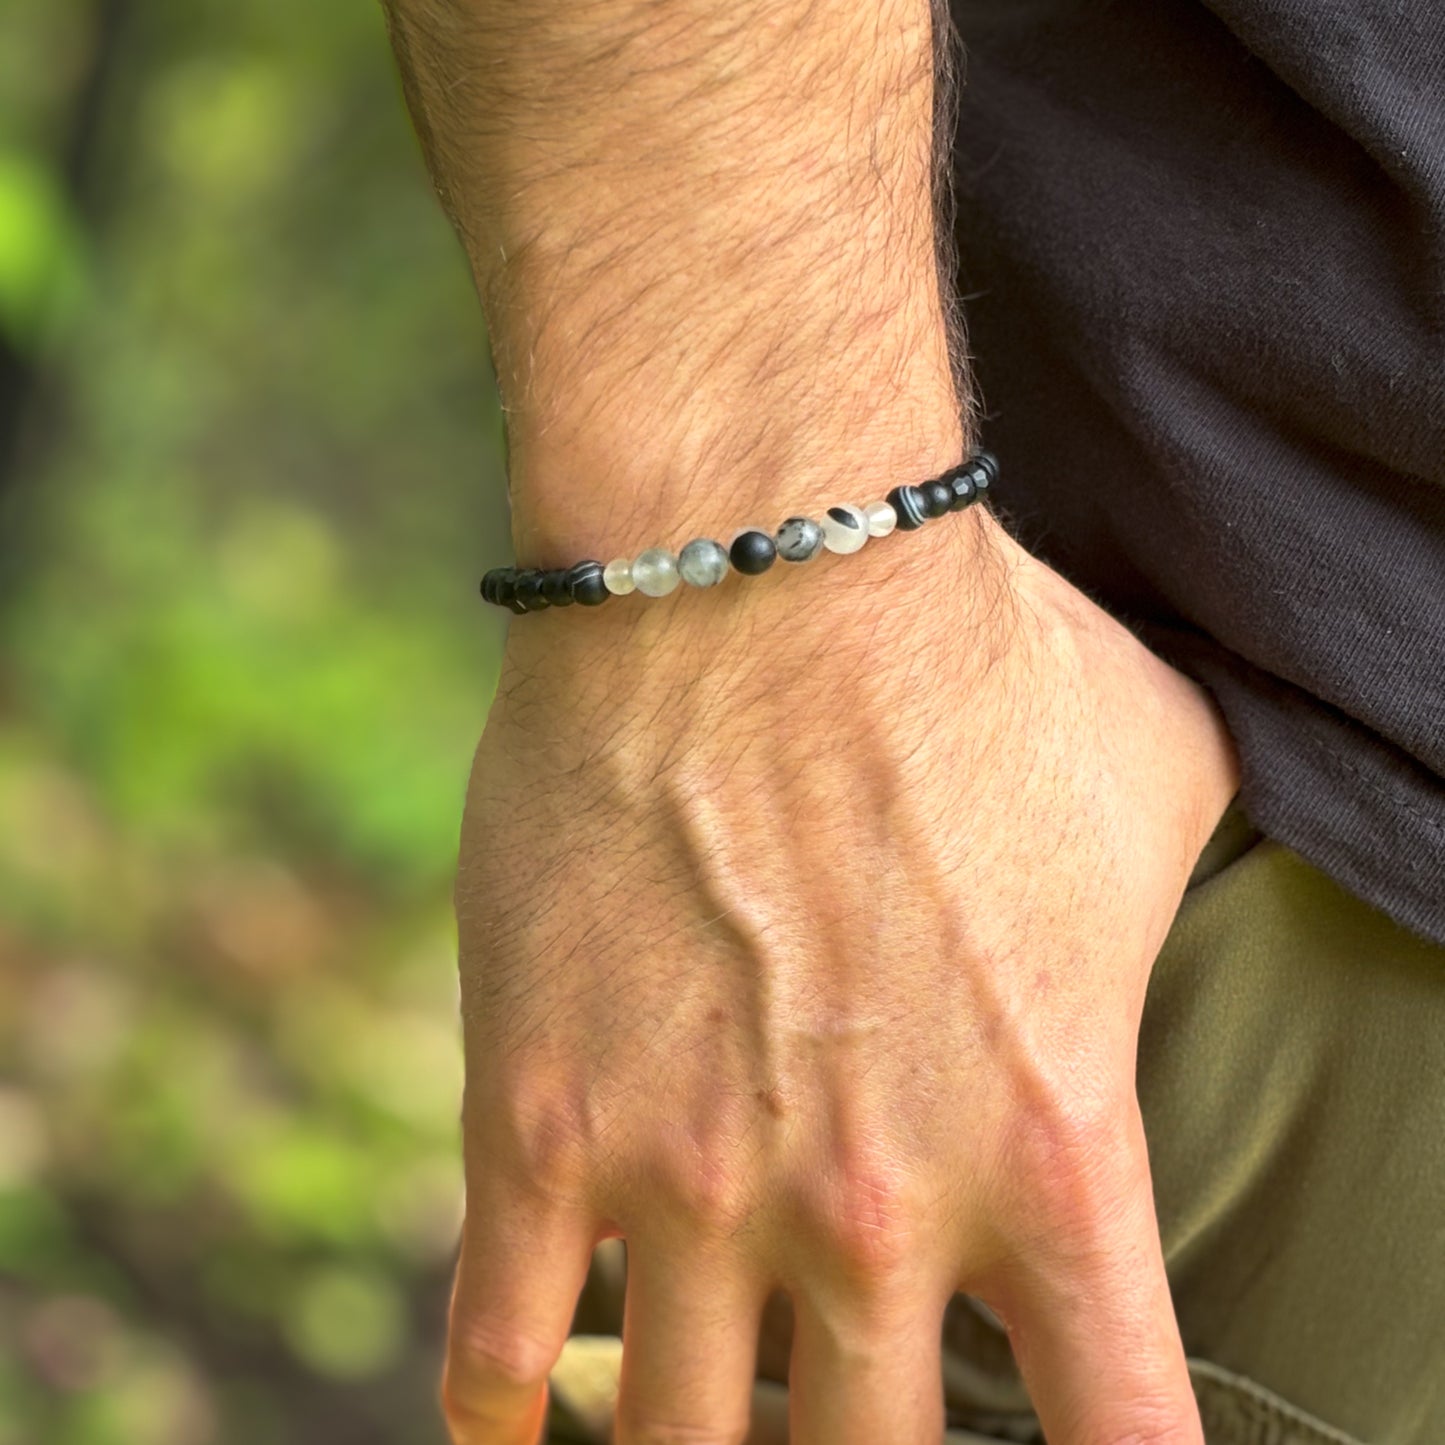 Durable and stylish men's strength bracelet